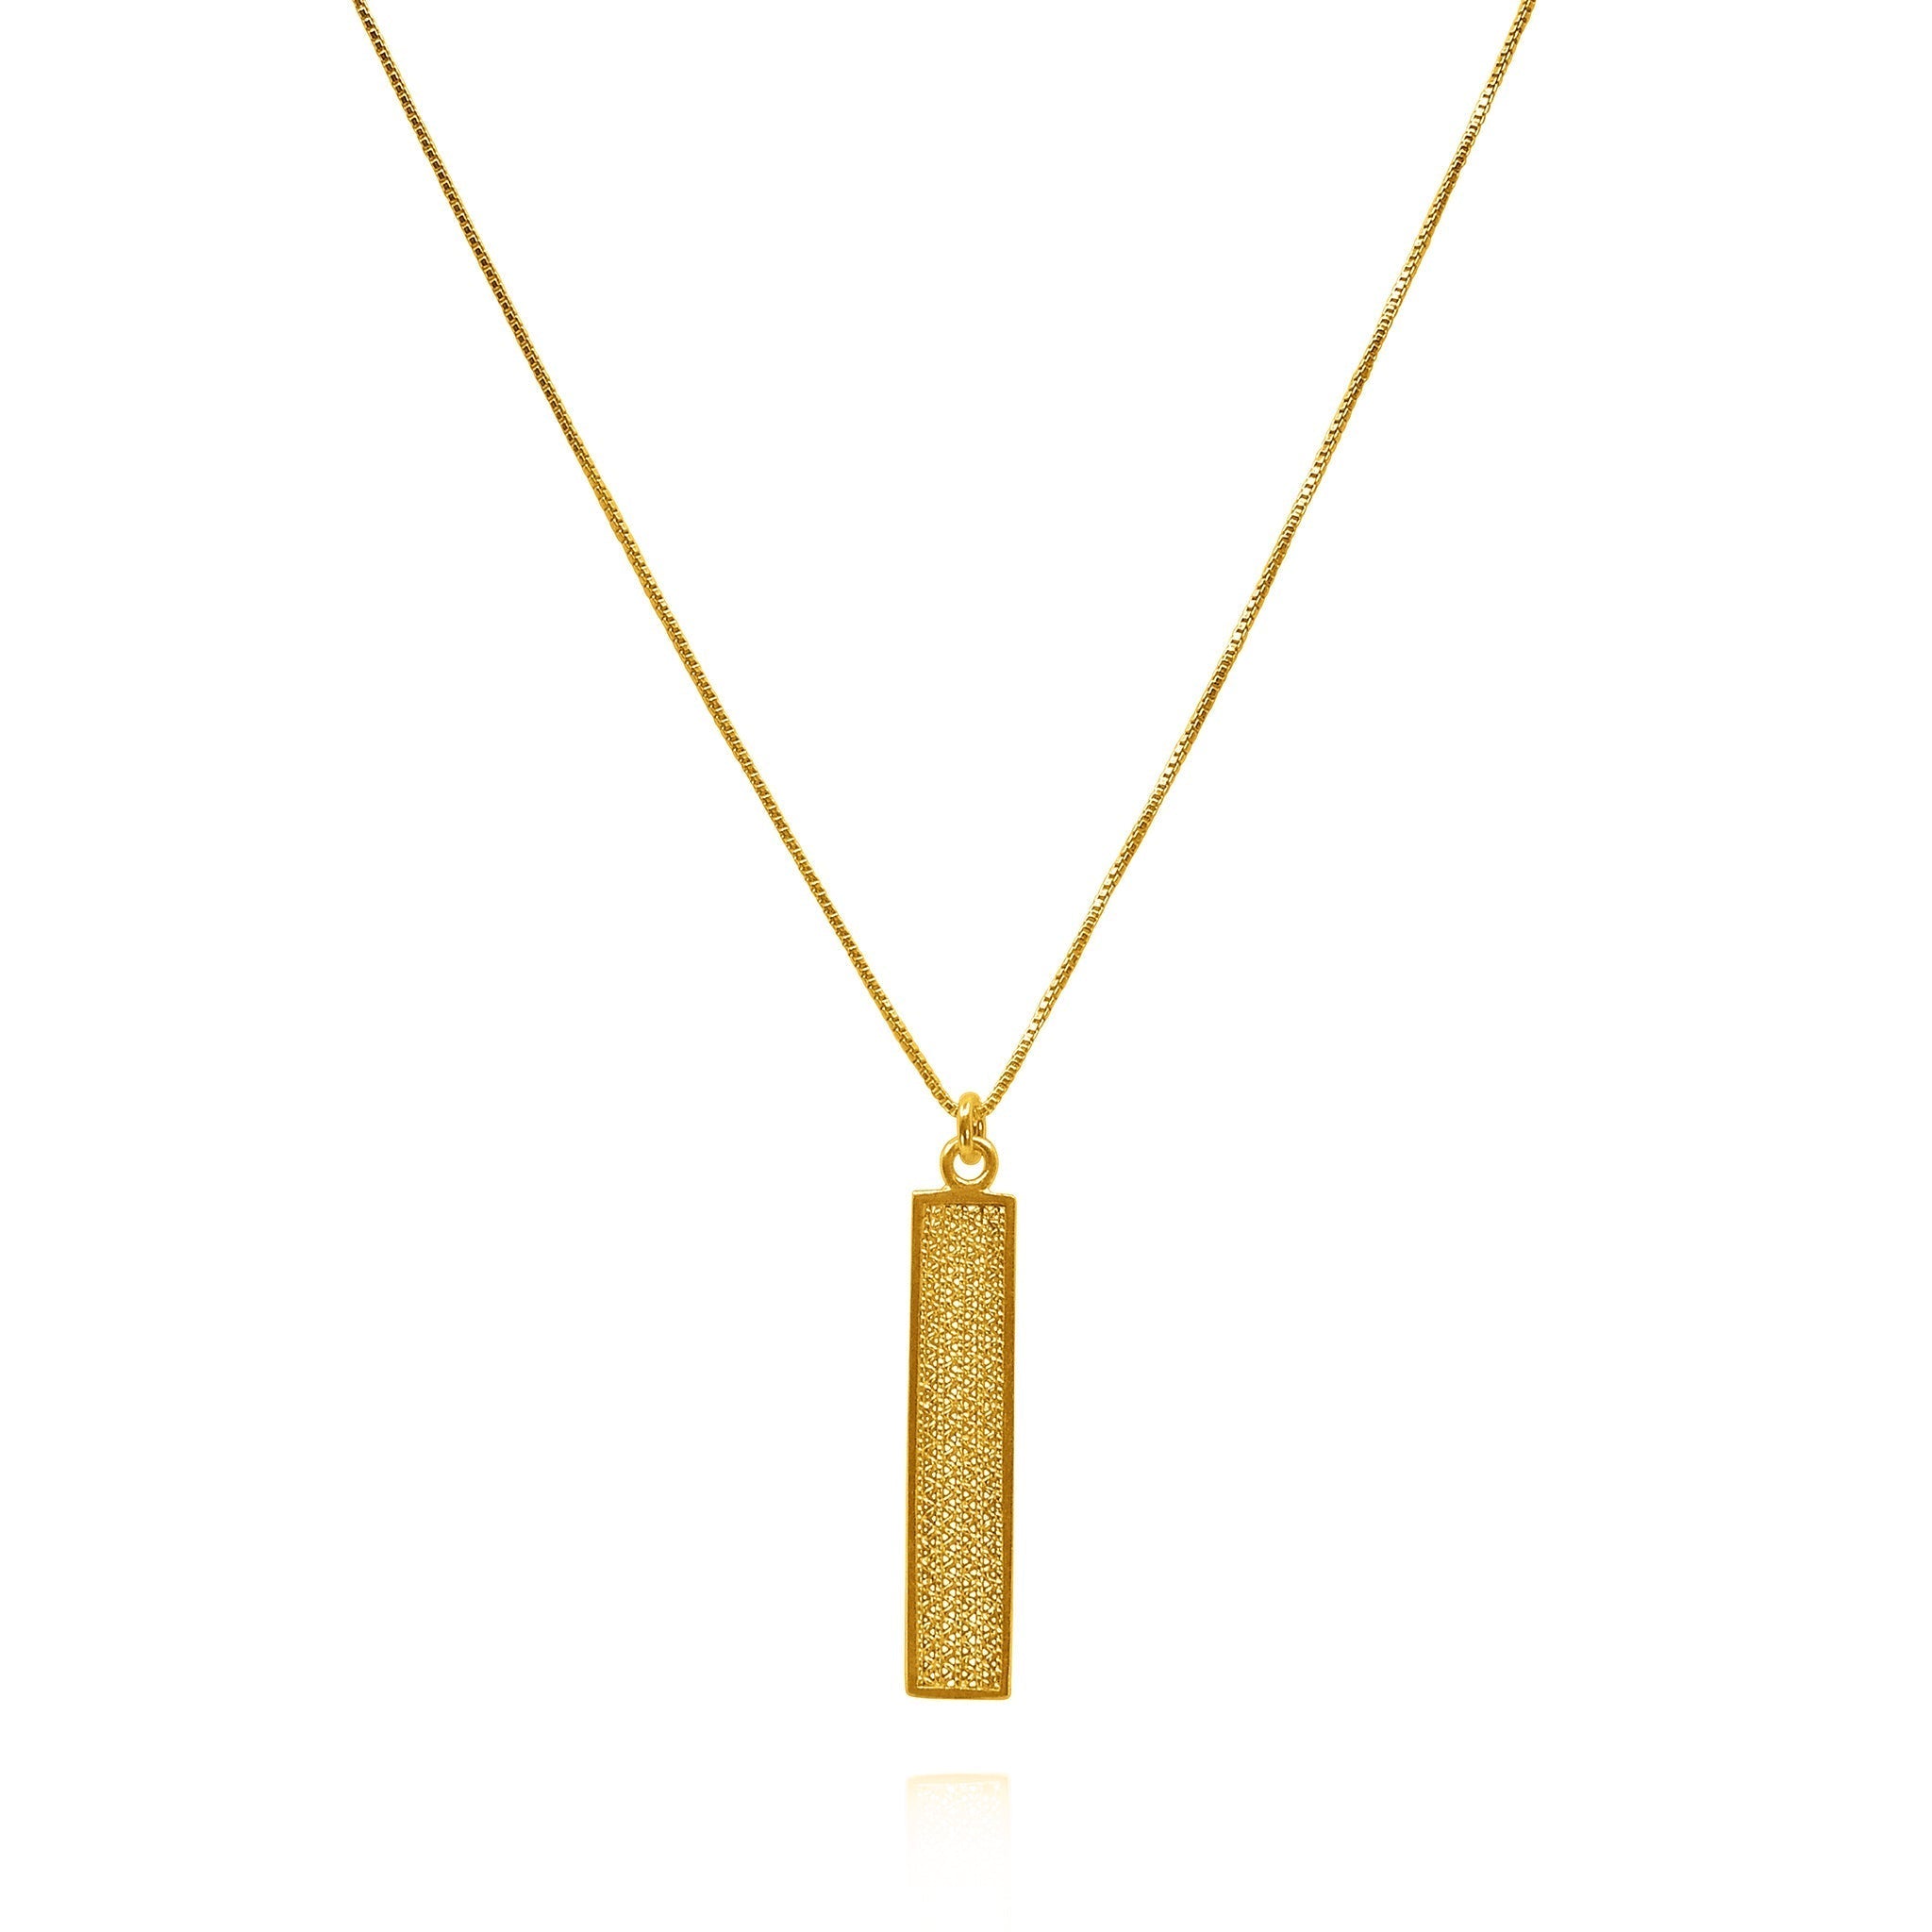 Basil 18k Gold Vermeil Plated Filigree Pendant Necklace - 16" - Necklaces